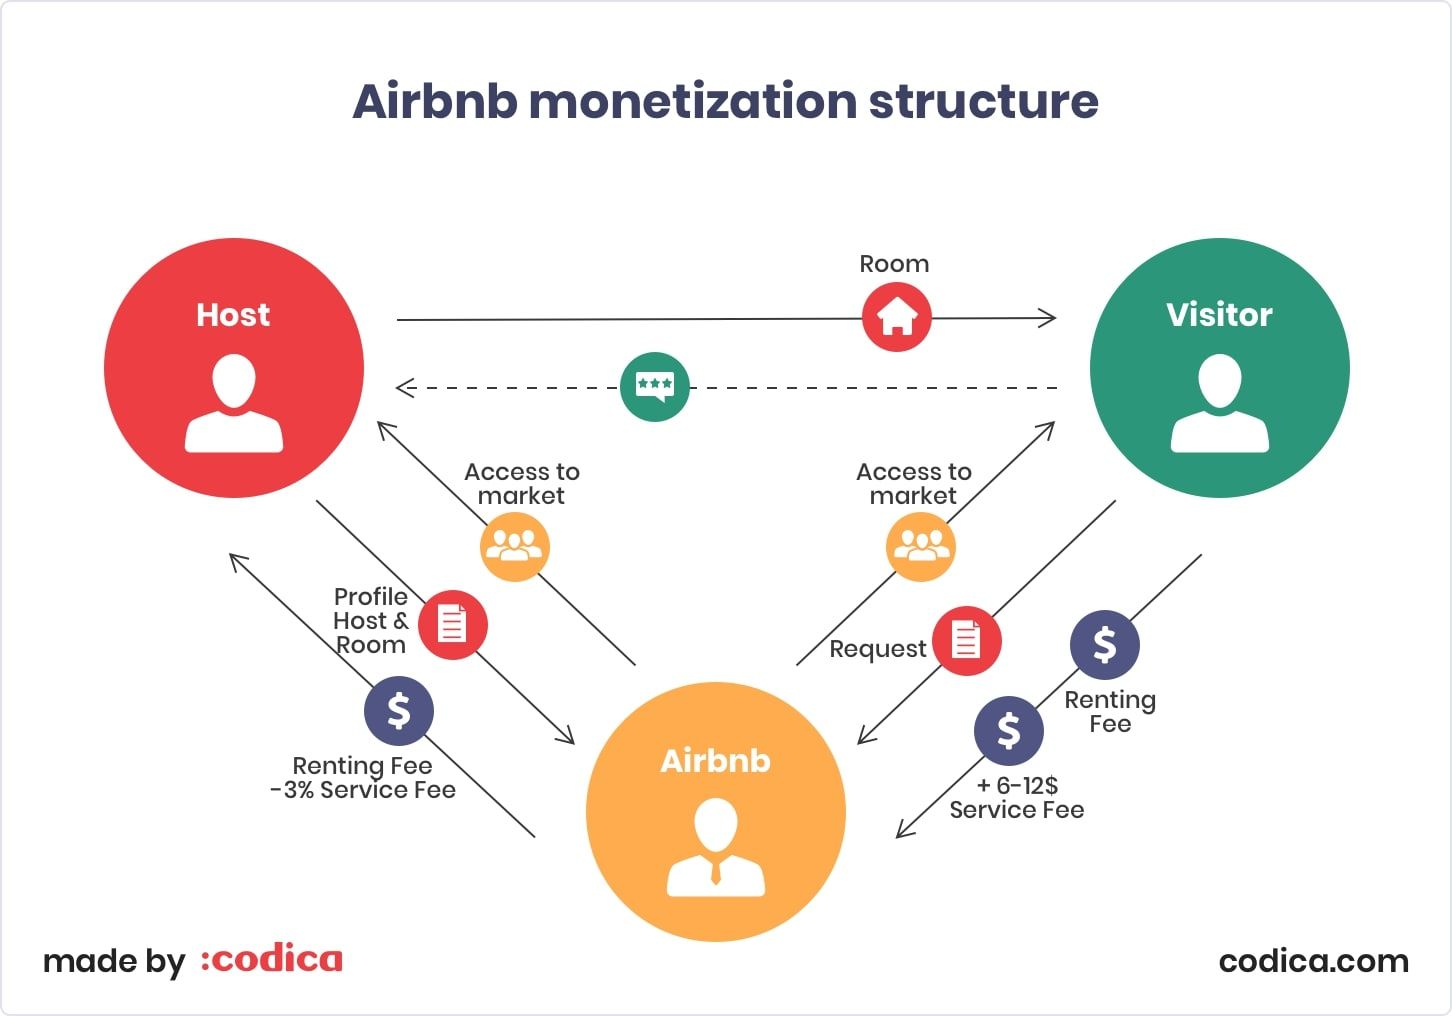 Airbnb monetization structure